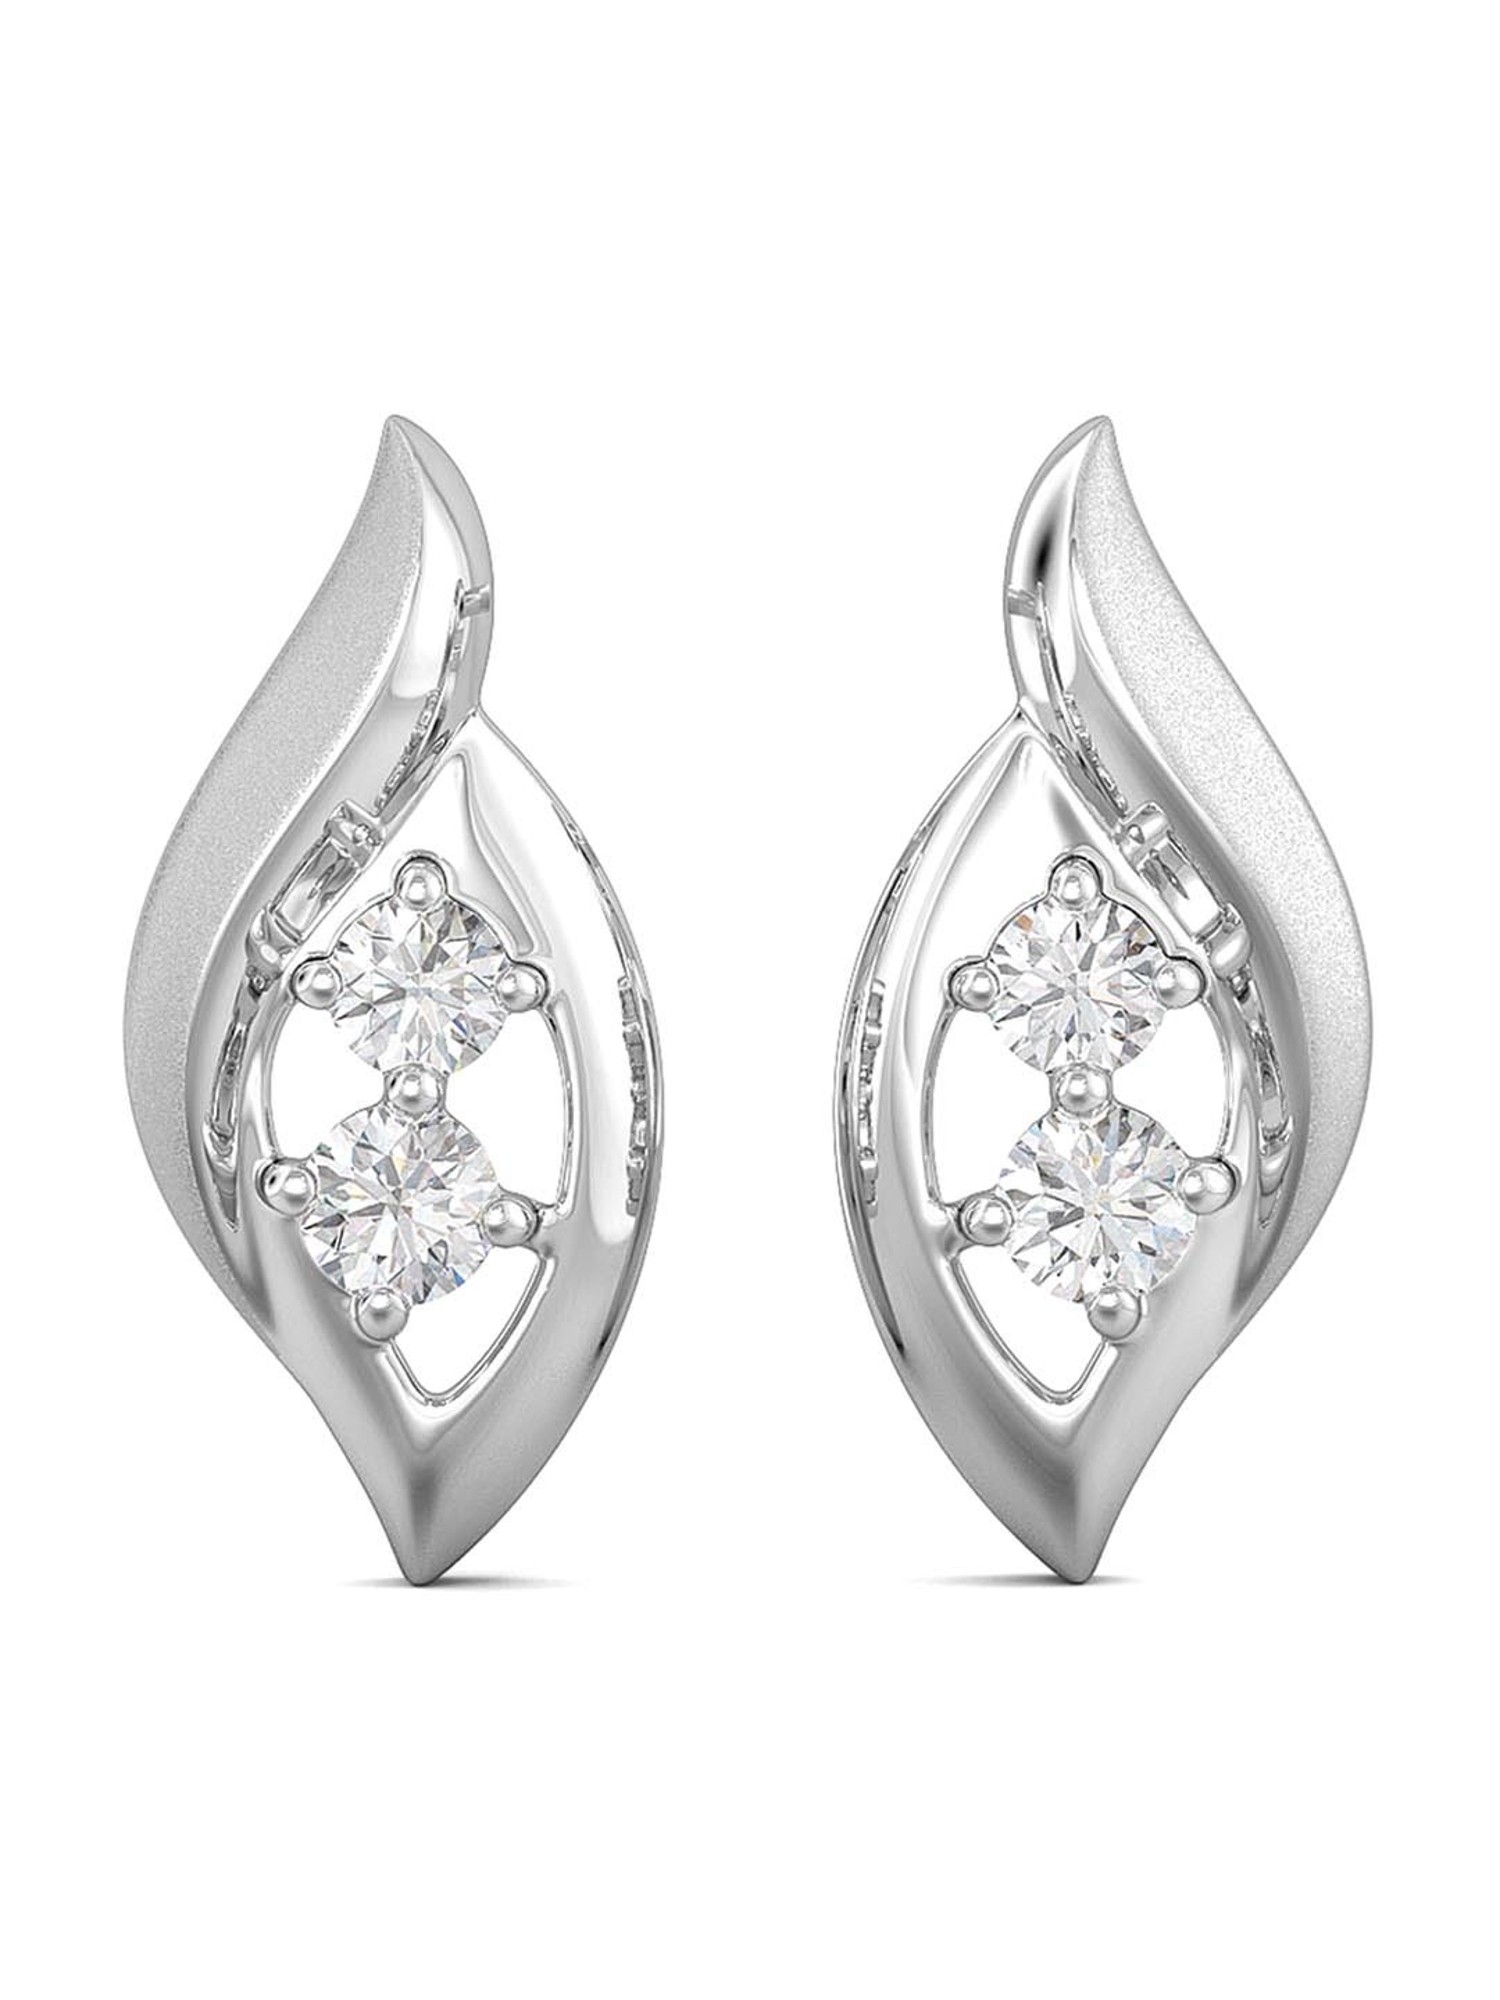 14 Platinum Earrings Designs, Buy Price @ 2954 - CaratLane.com